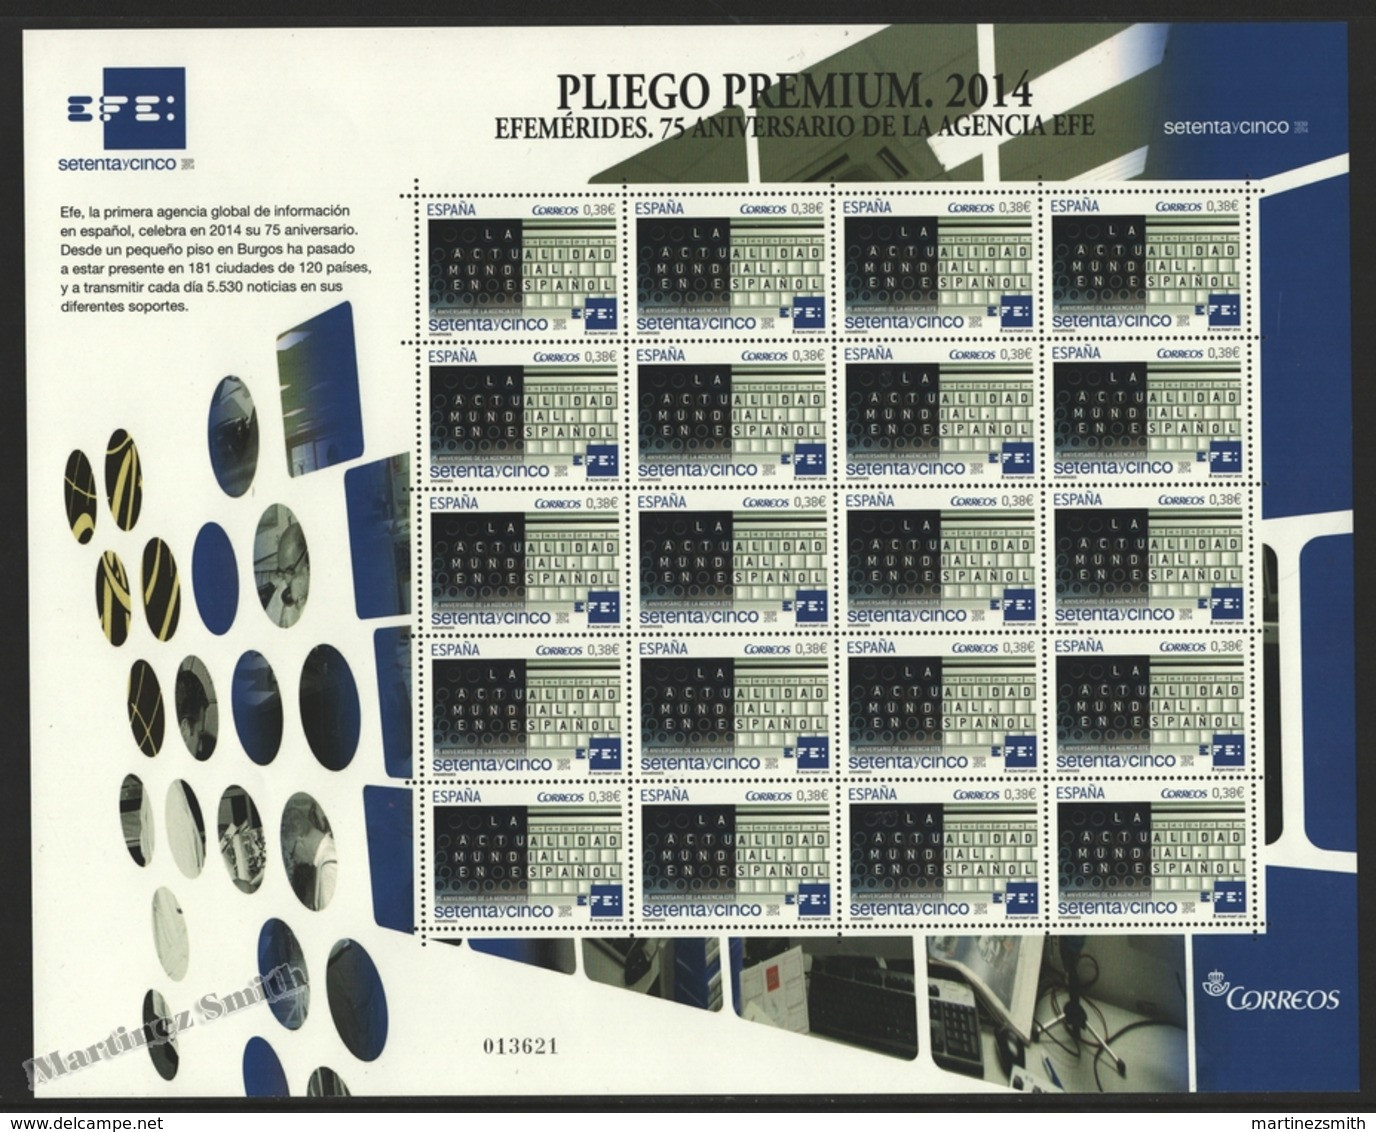 Espagne - Spain - España - Premium Sheet 2014 - Yvert 4605, 75th Ann. Newspaper Global Agency, EFE - MNH - Full Sheets